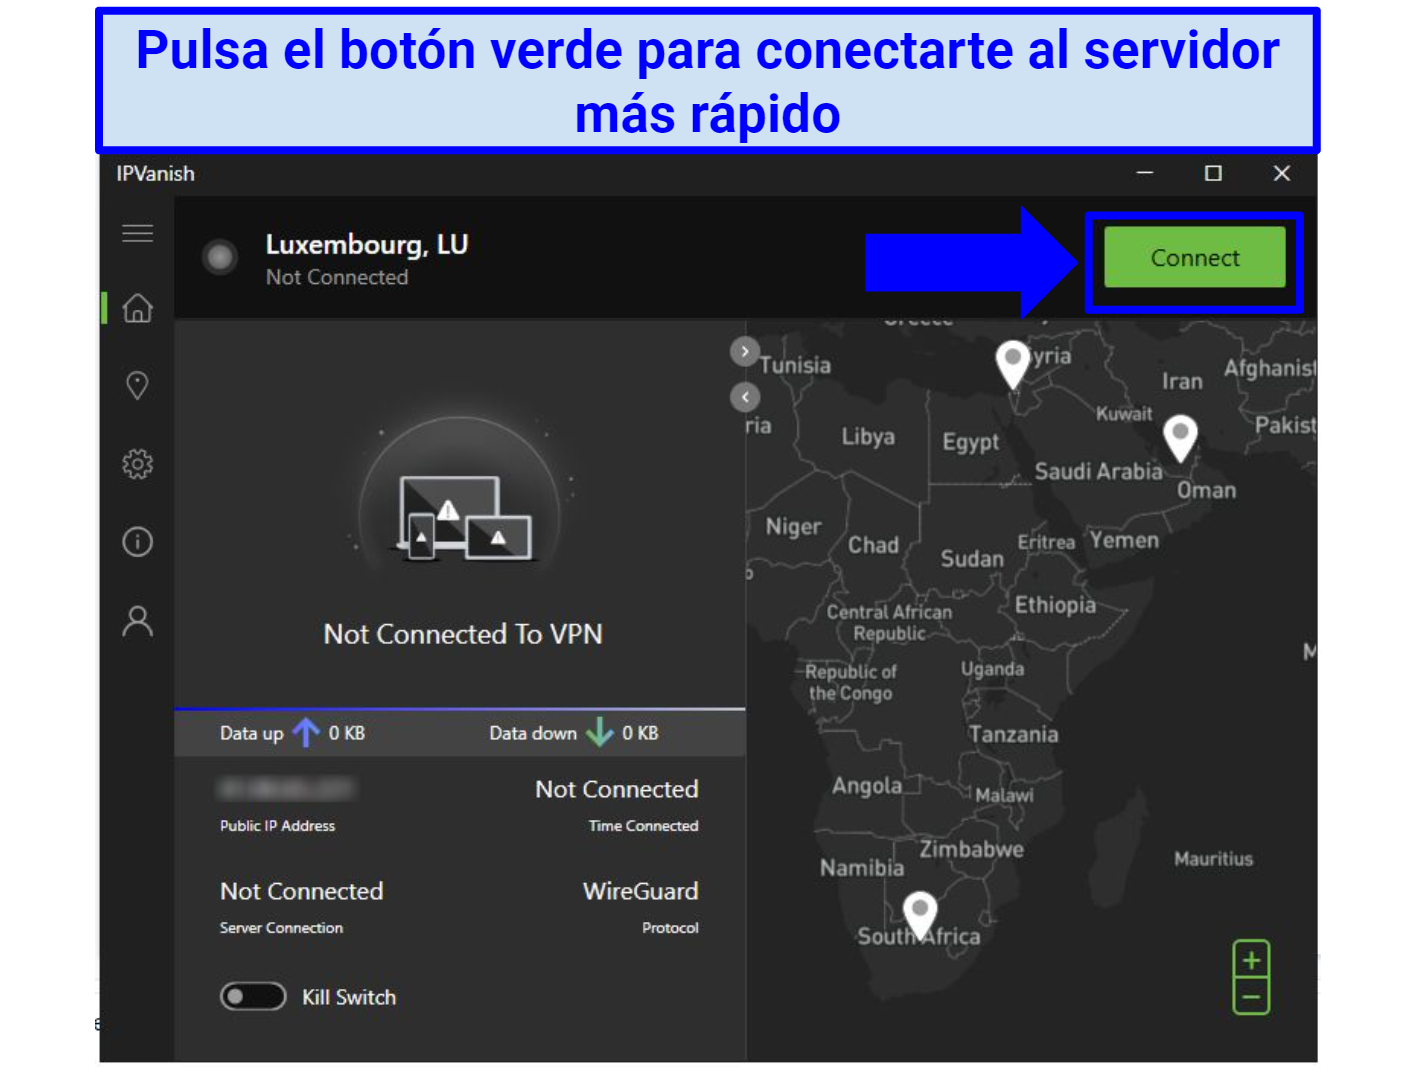 Screenshot showing the IPVanish Windows app home page